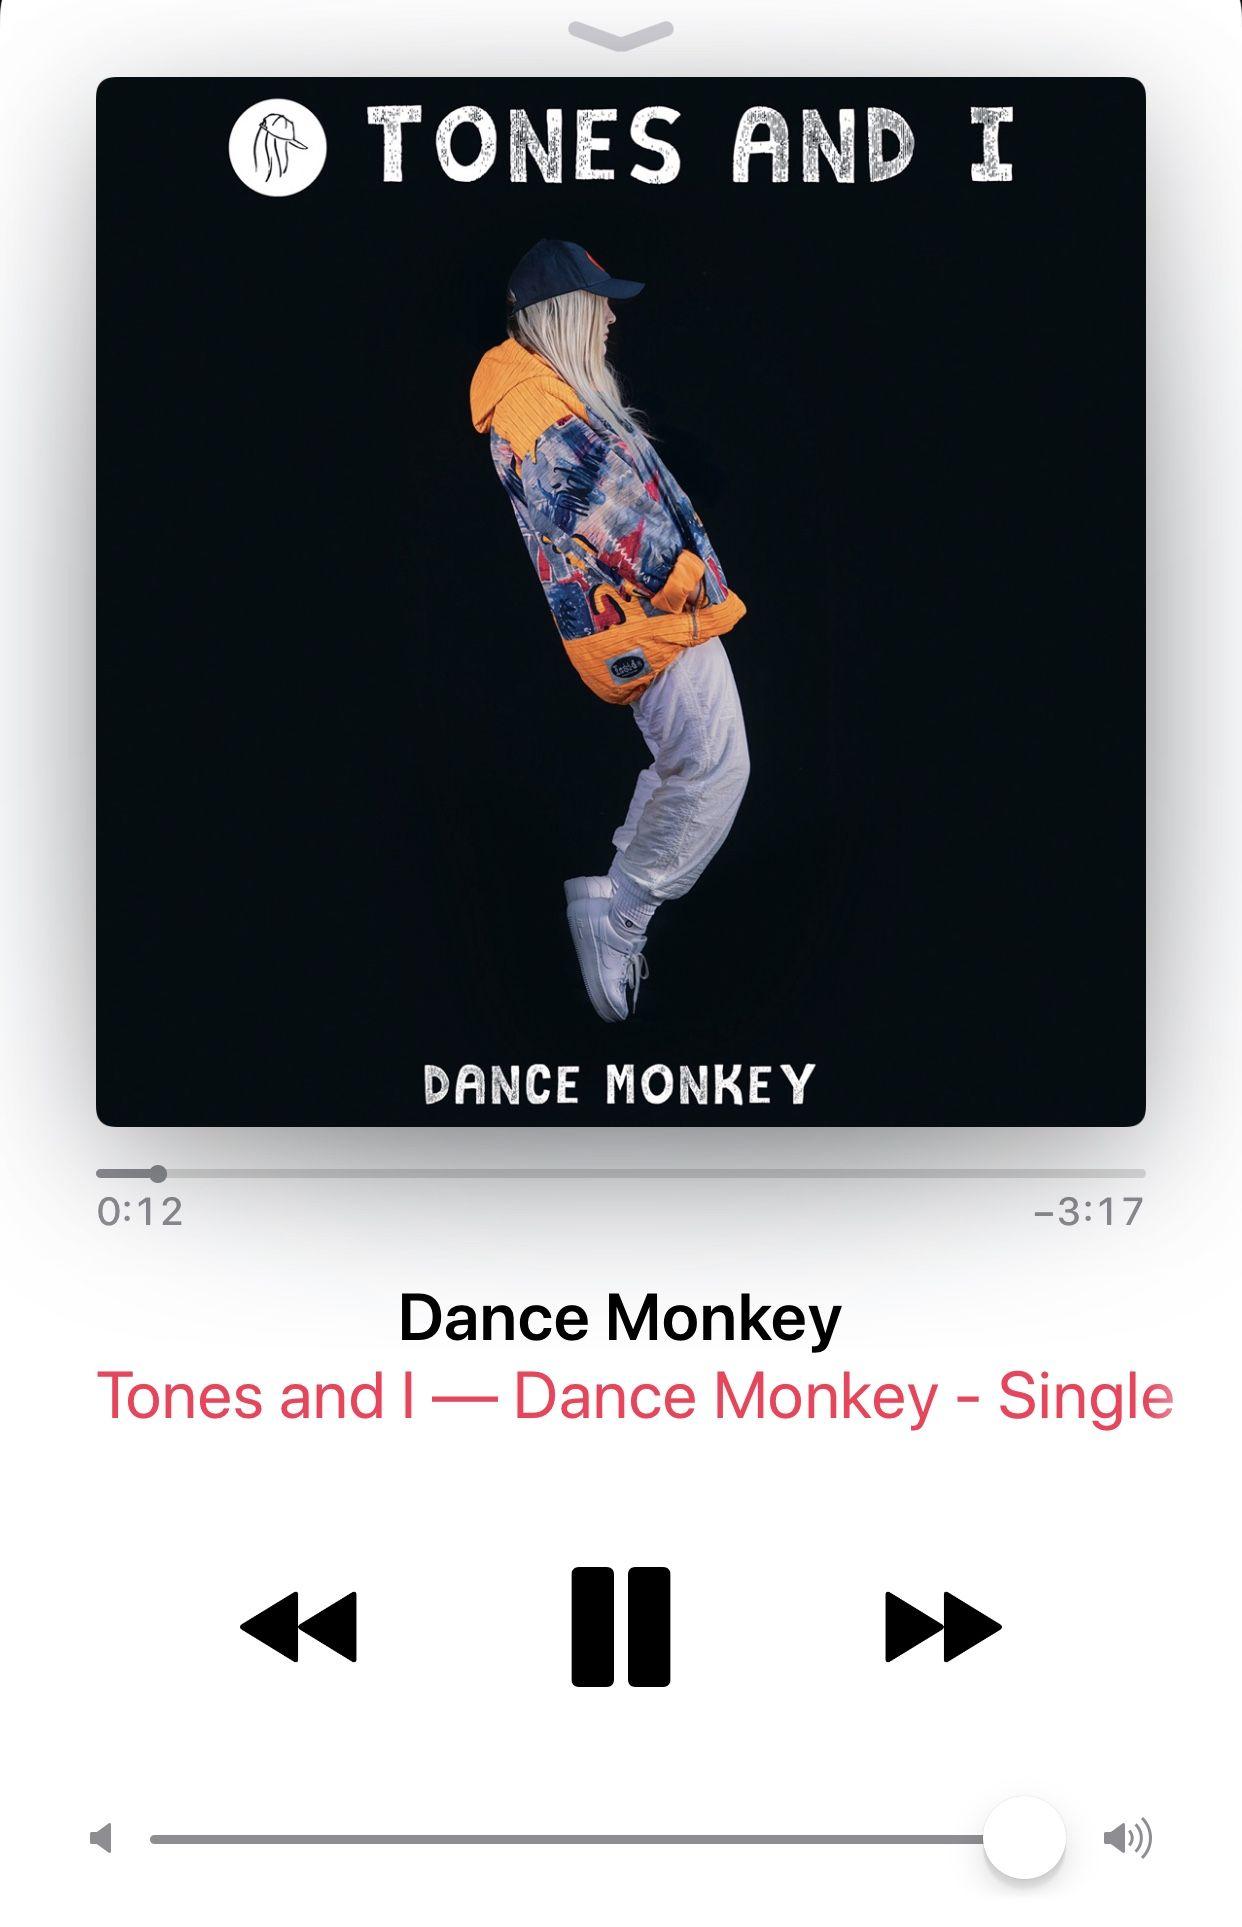 Tones monkeys текст